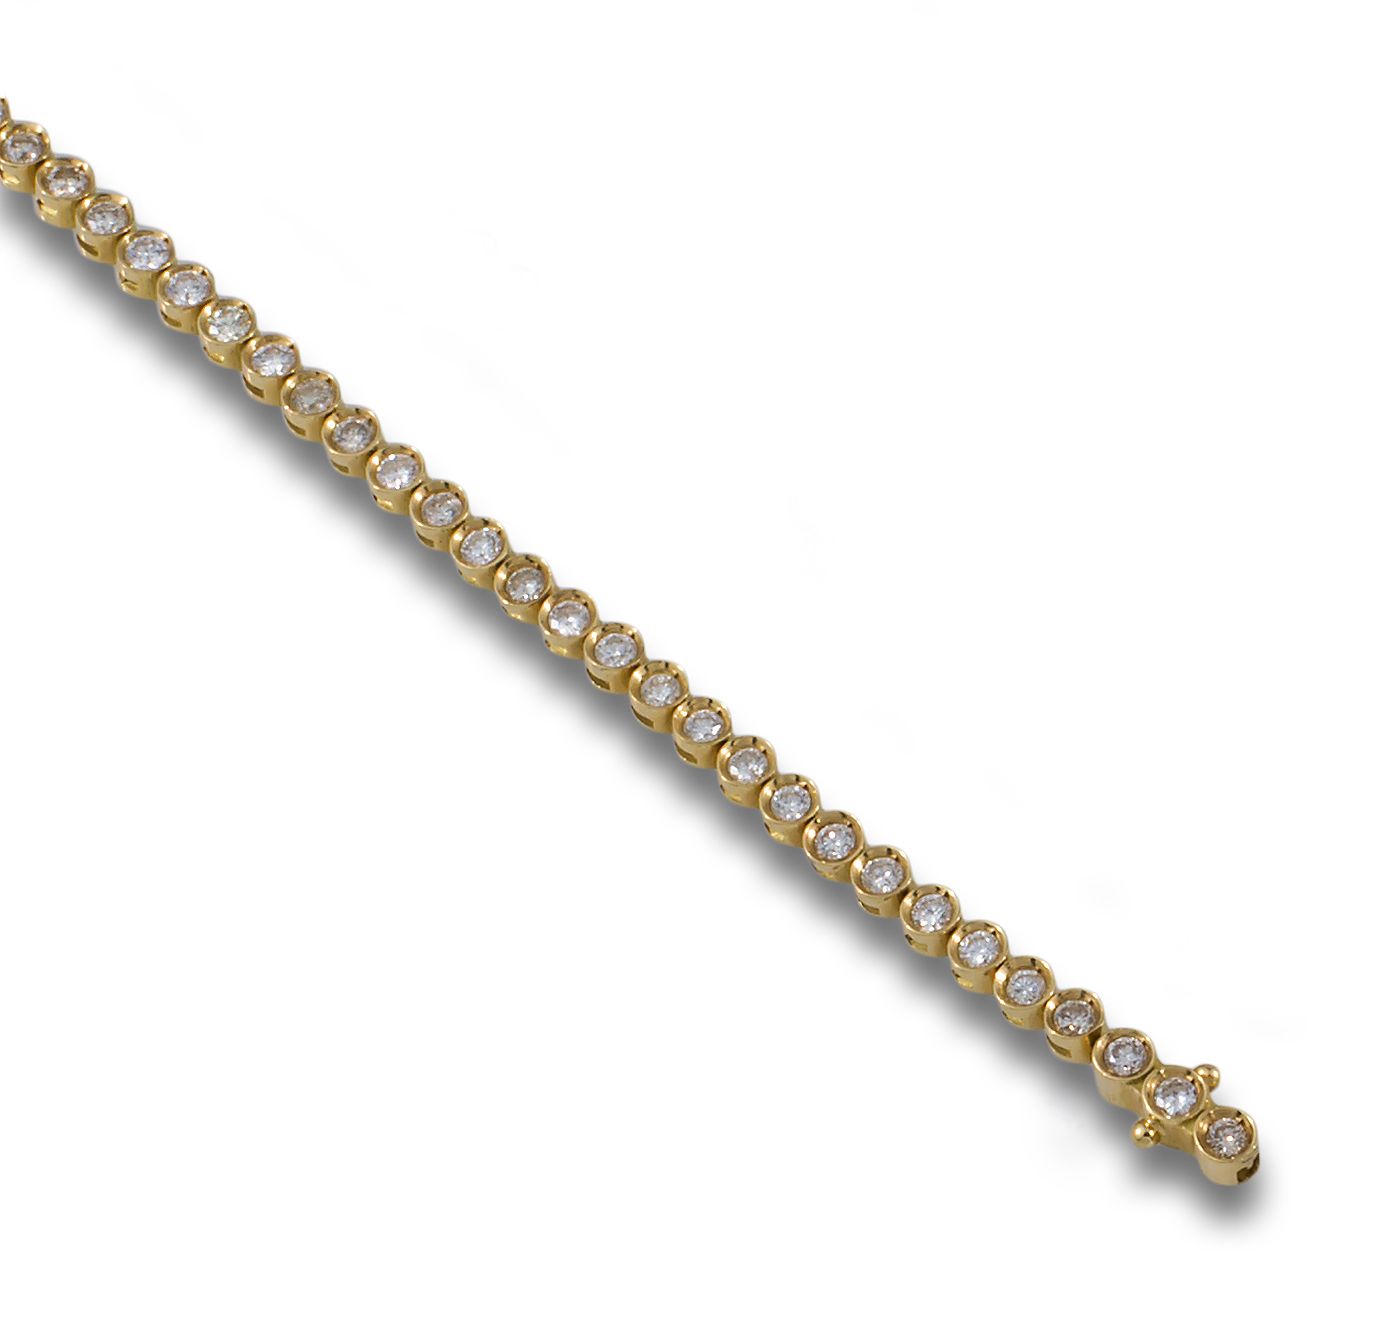 GOLD BRACELET CHATONS DIAMONDS 37 Armband aus 18kt Gelbgold im Chaton-Design mit&hellip;